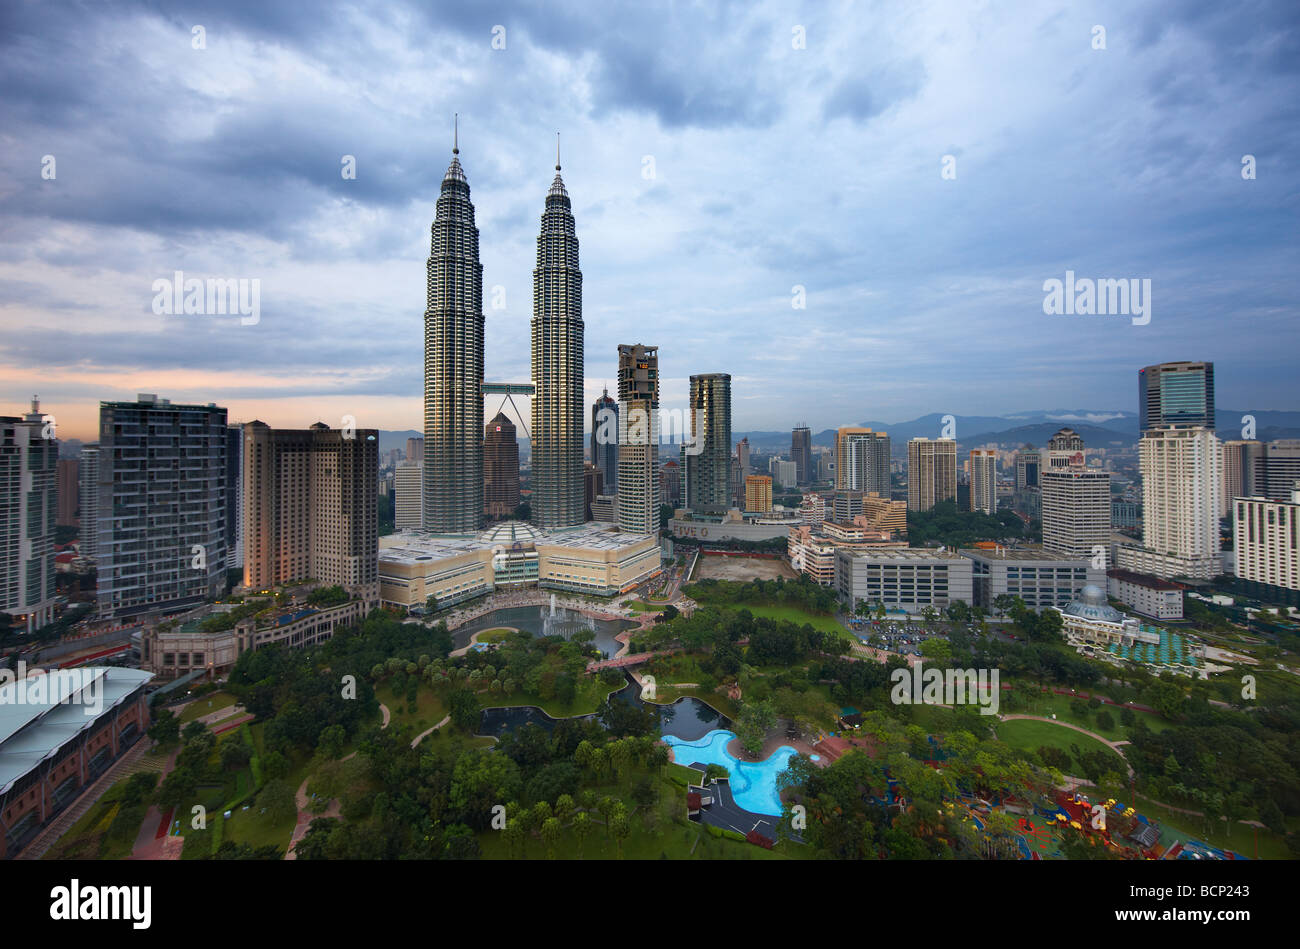 the Petronas Towers and the Kuala Lumpur skyline at dusk, Malaysia Stock Photo